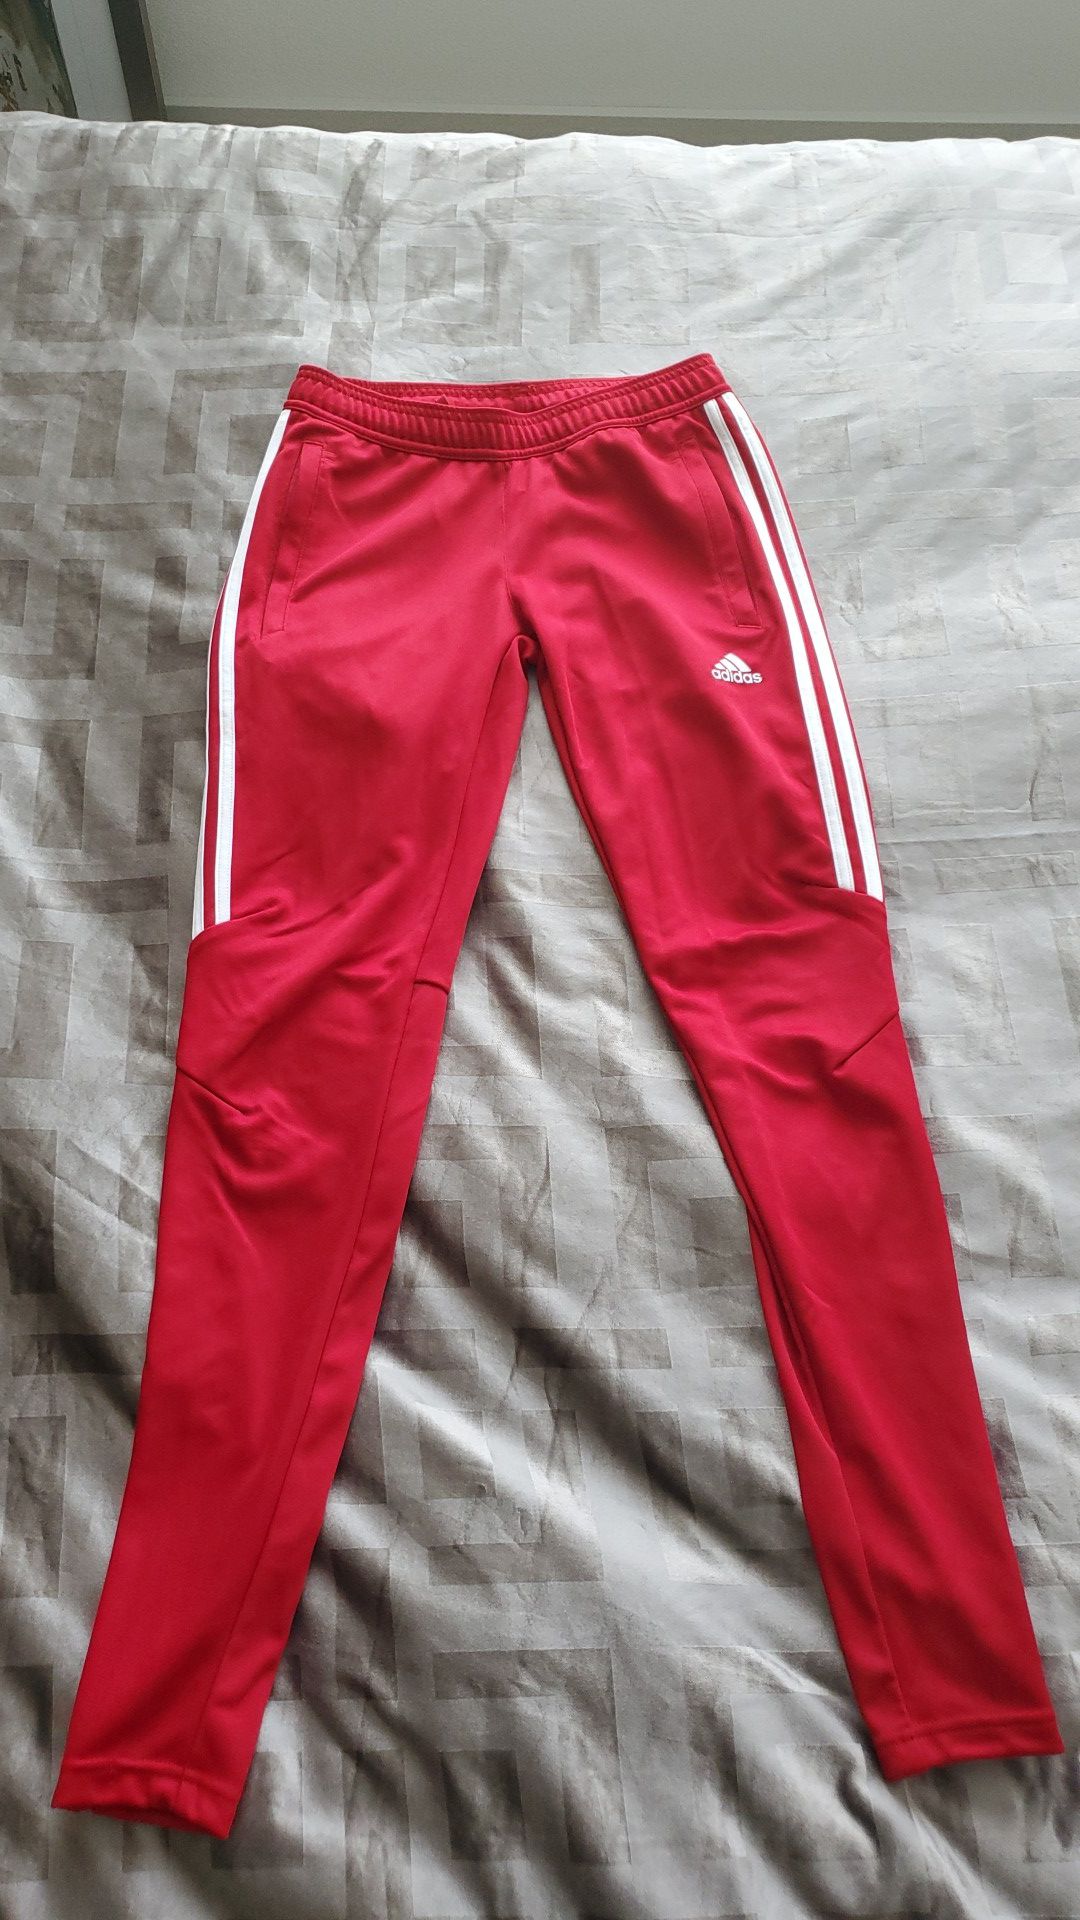 fractura depositar Se convierte en Adidas Tiro 17 Soccer Pant Red (Women's XS) $25 for Sale in Houston, TX -  OfferUp